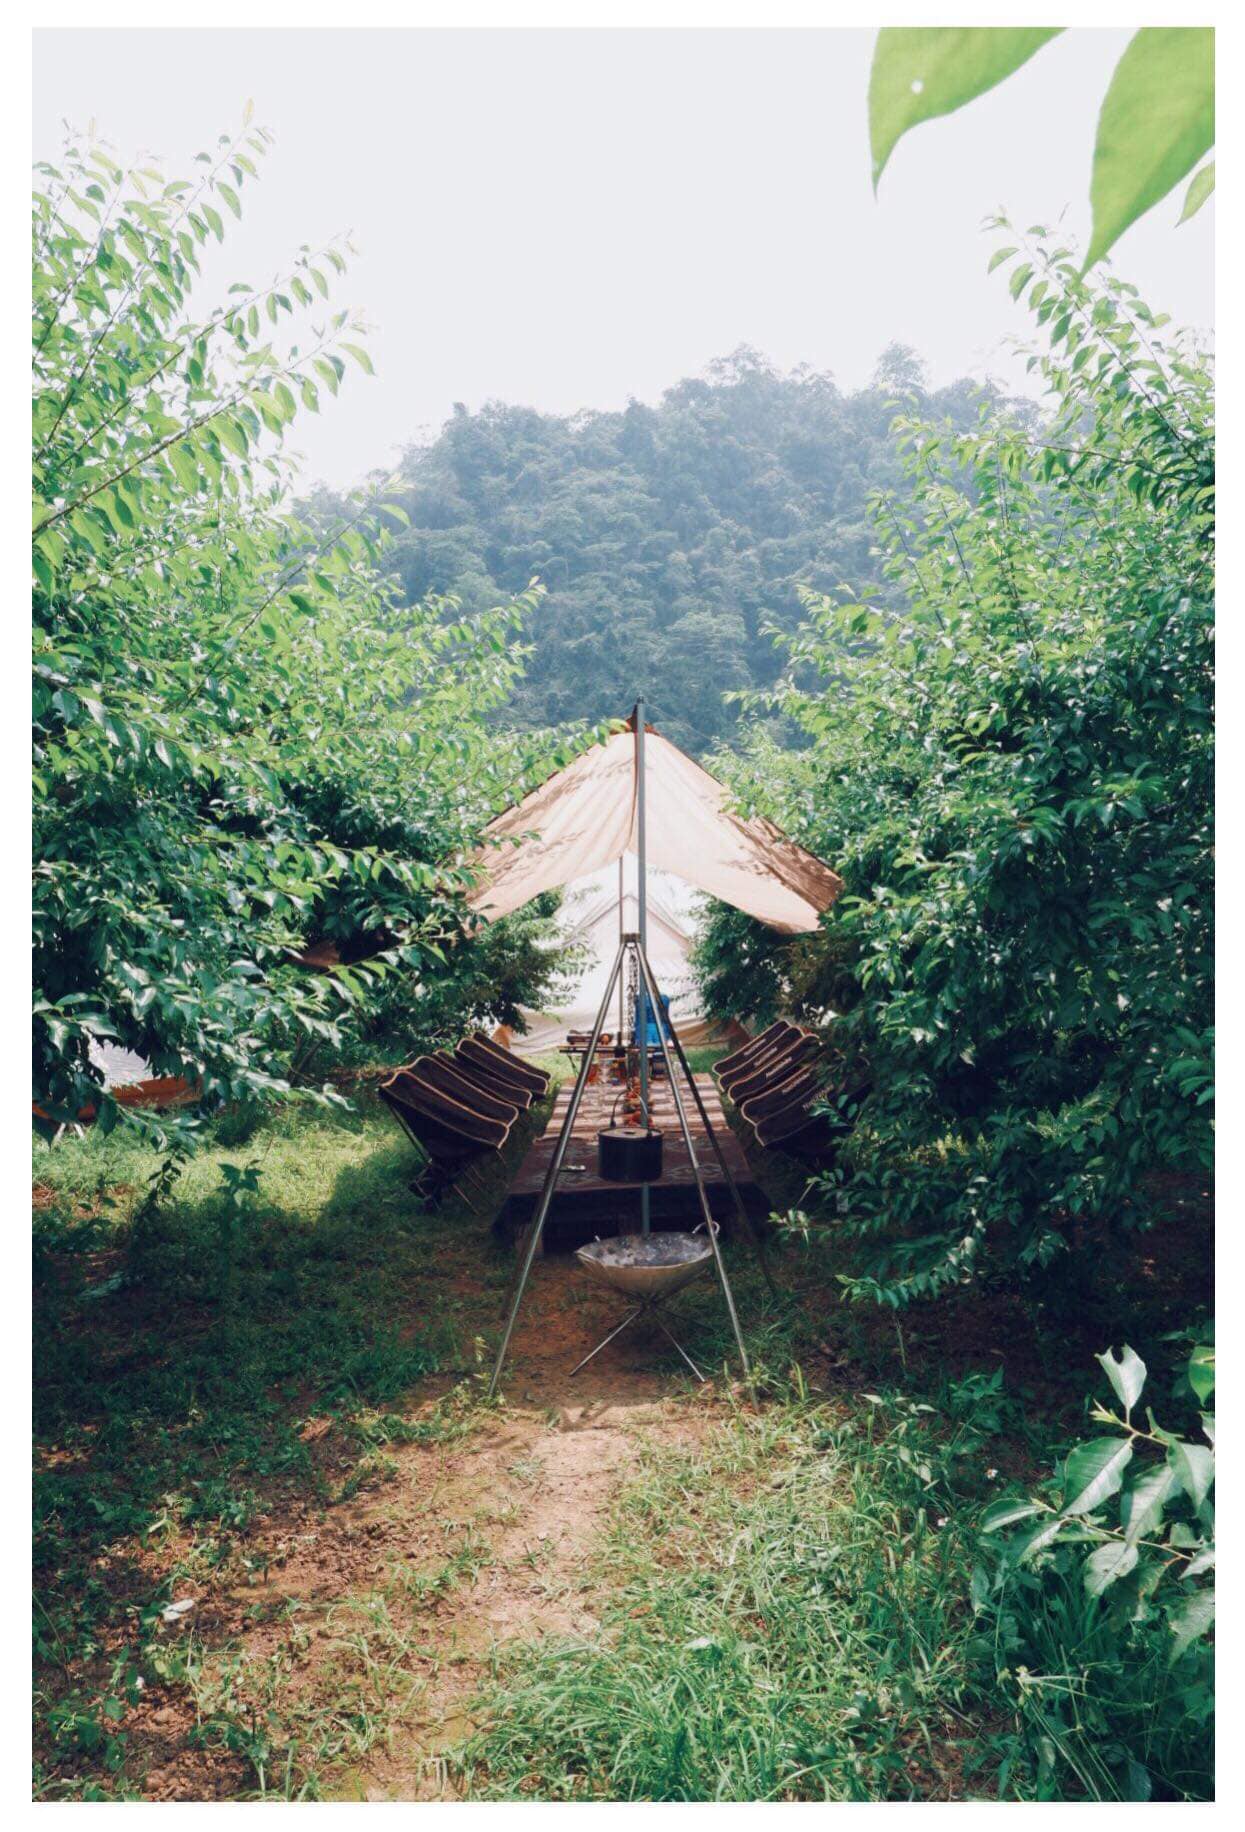 The Camp Mộc Châu-Sơn La